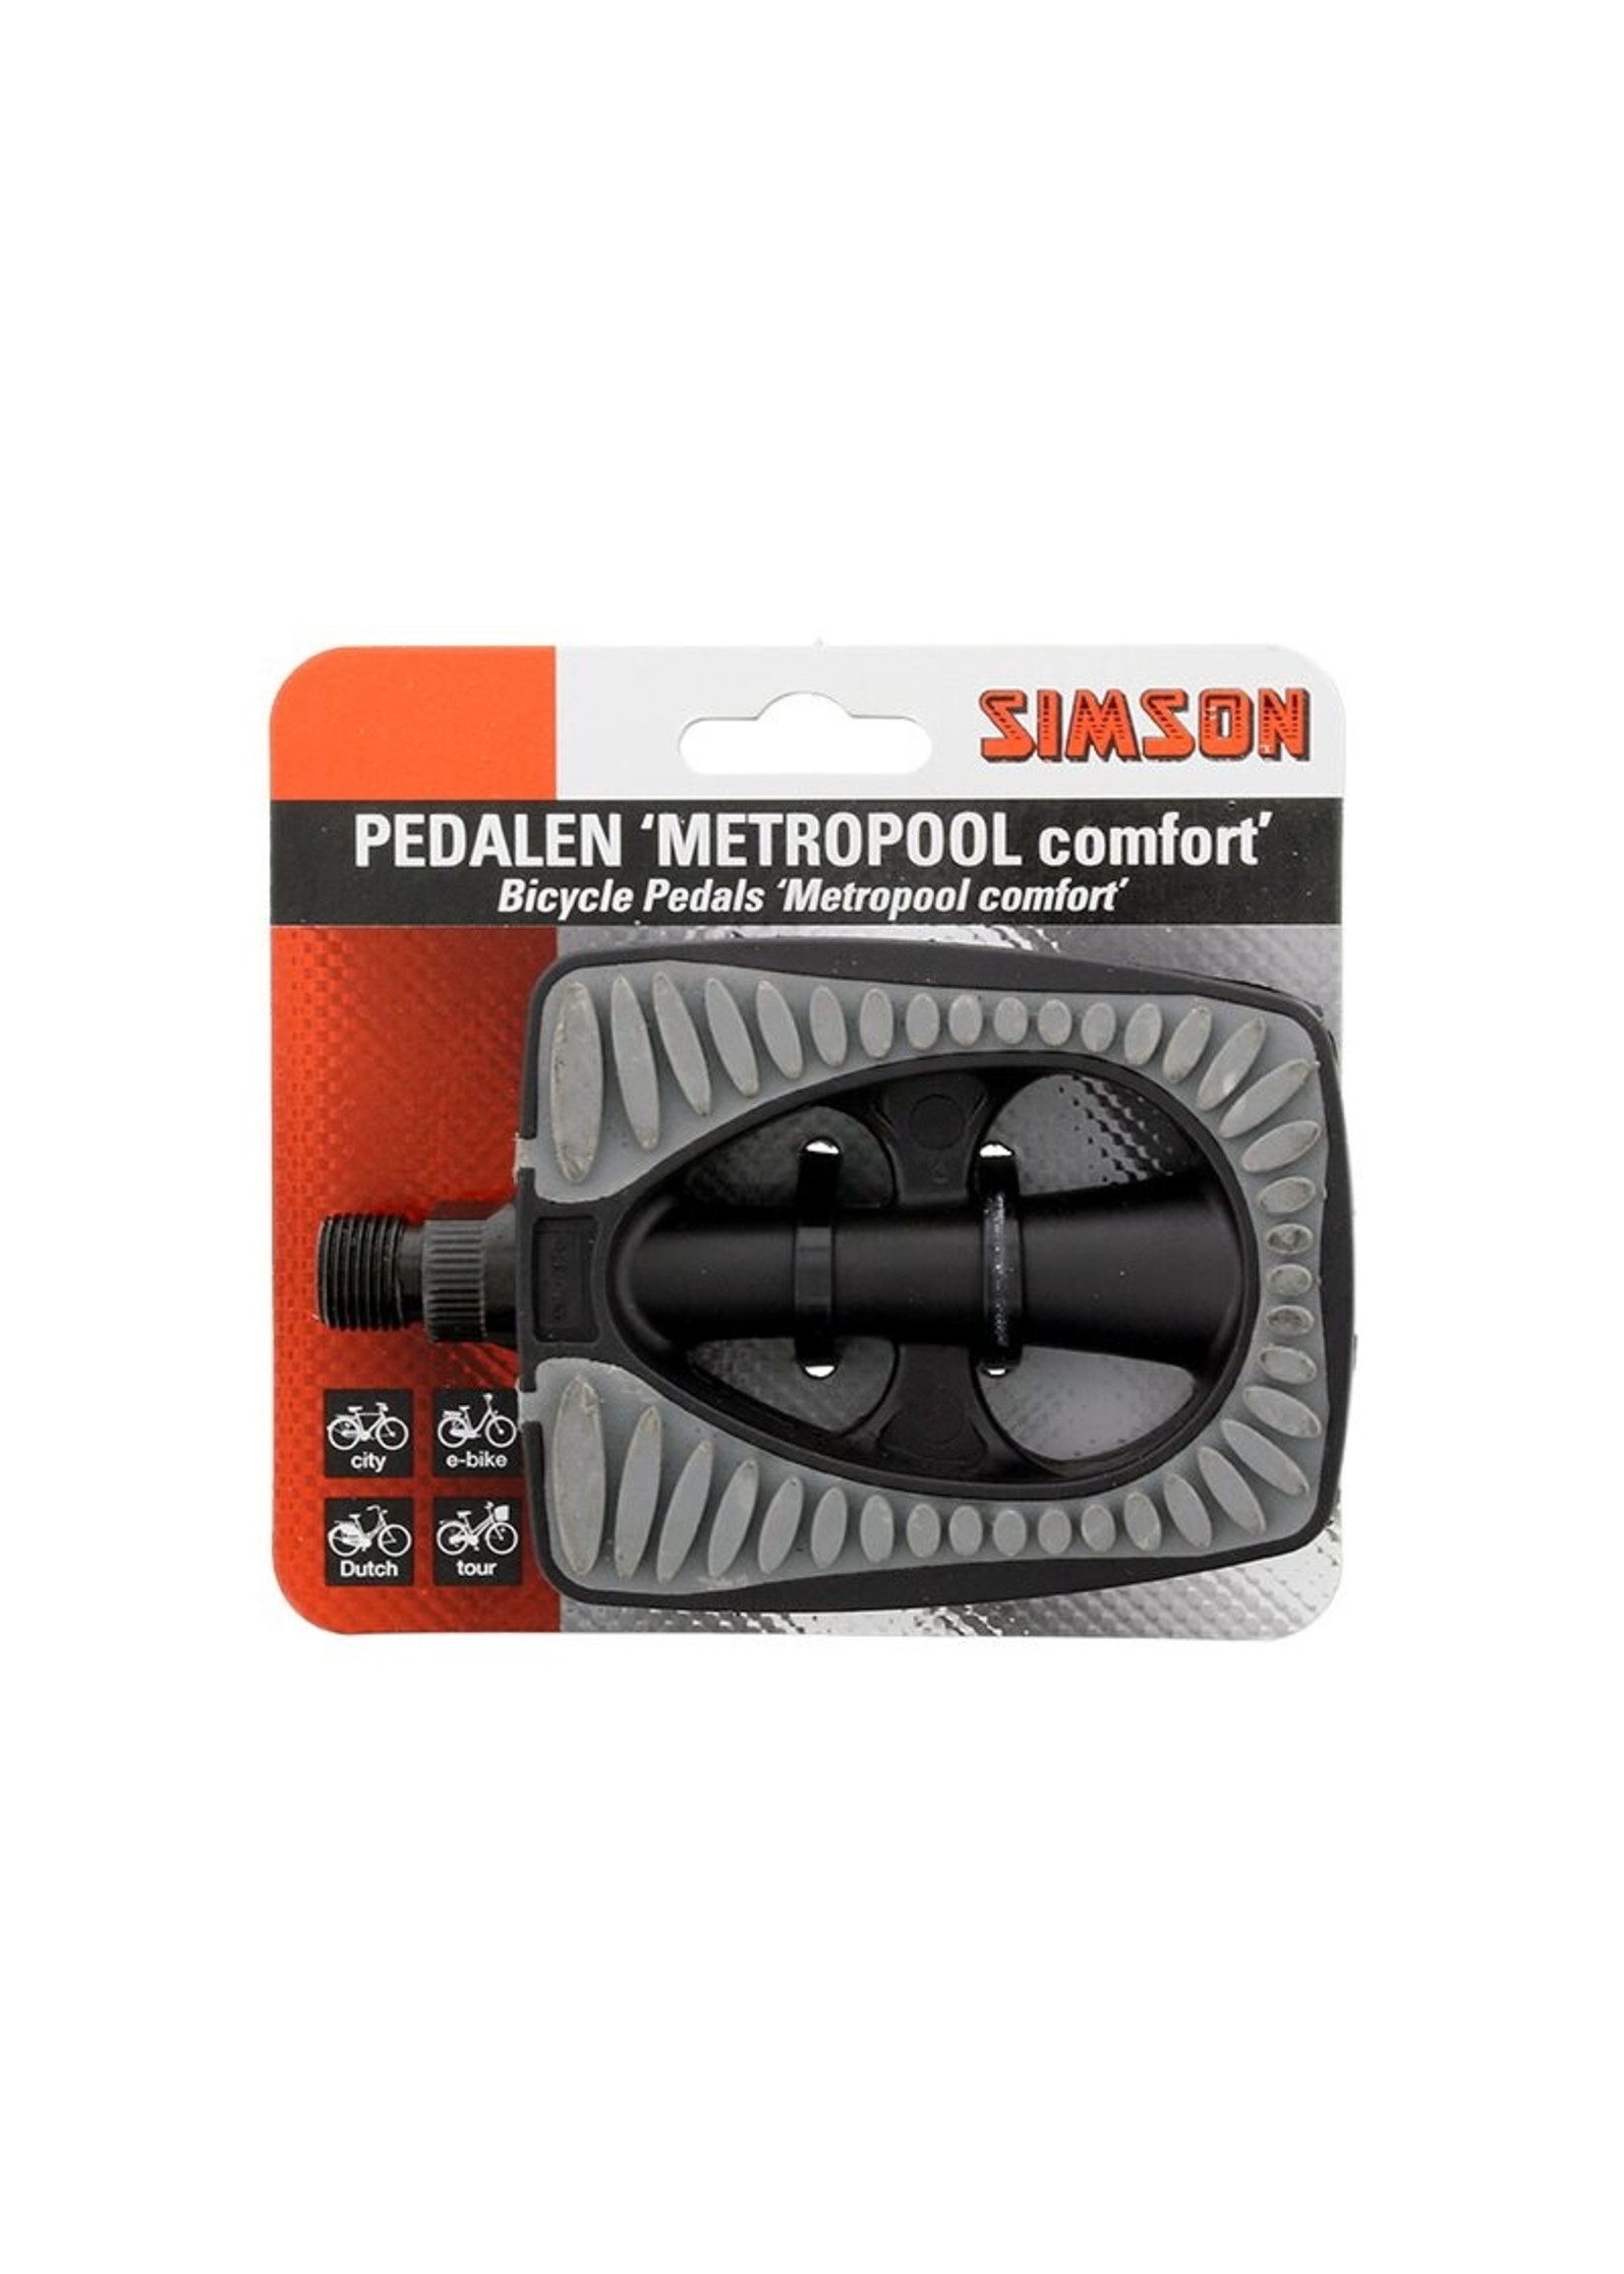 Simson - Pedals Metropole comfort